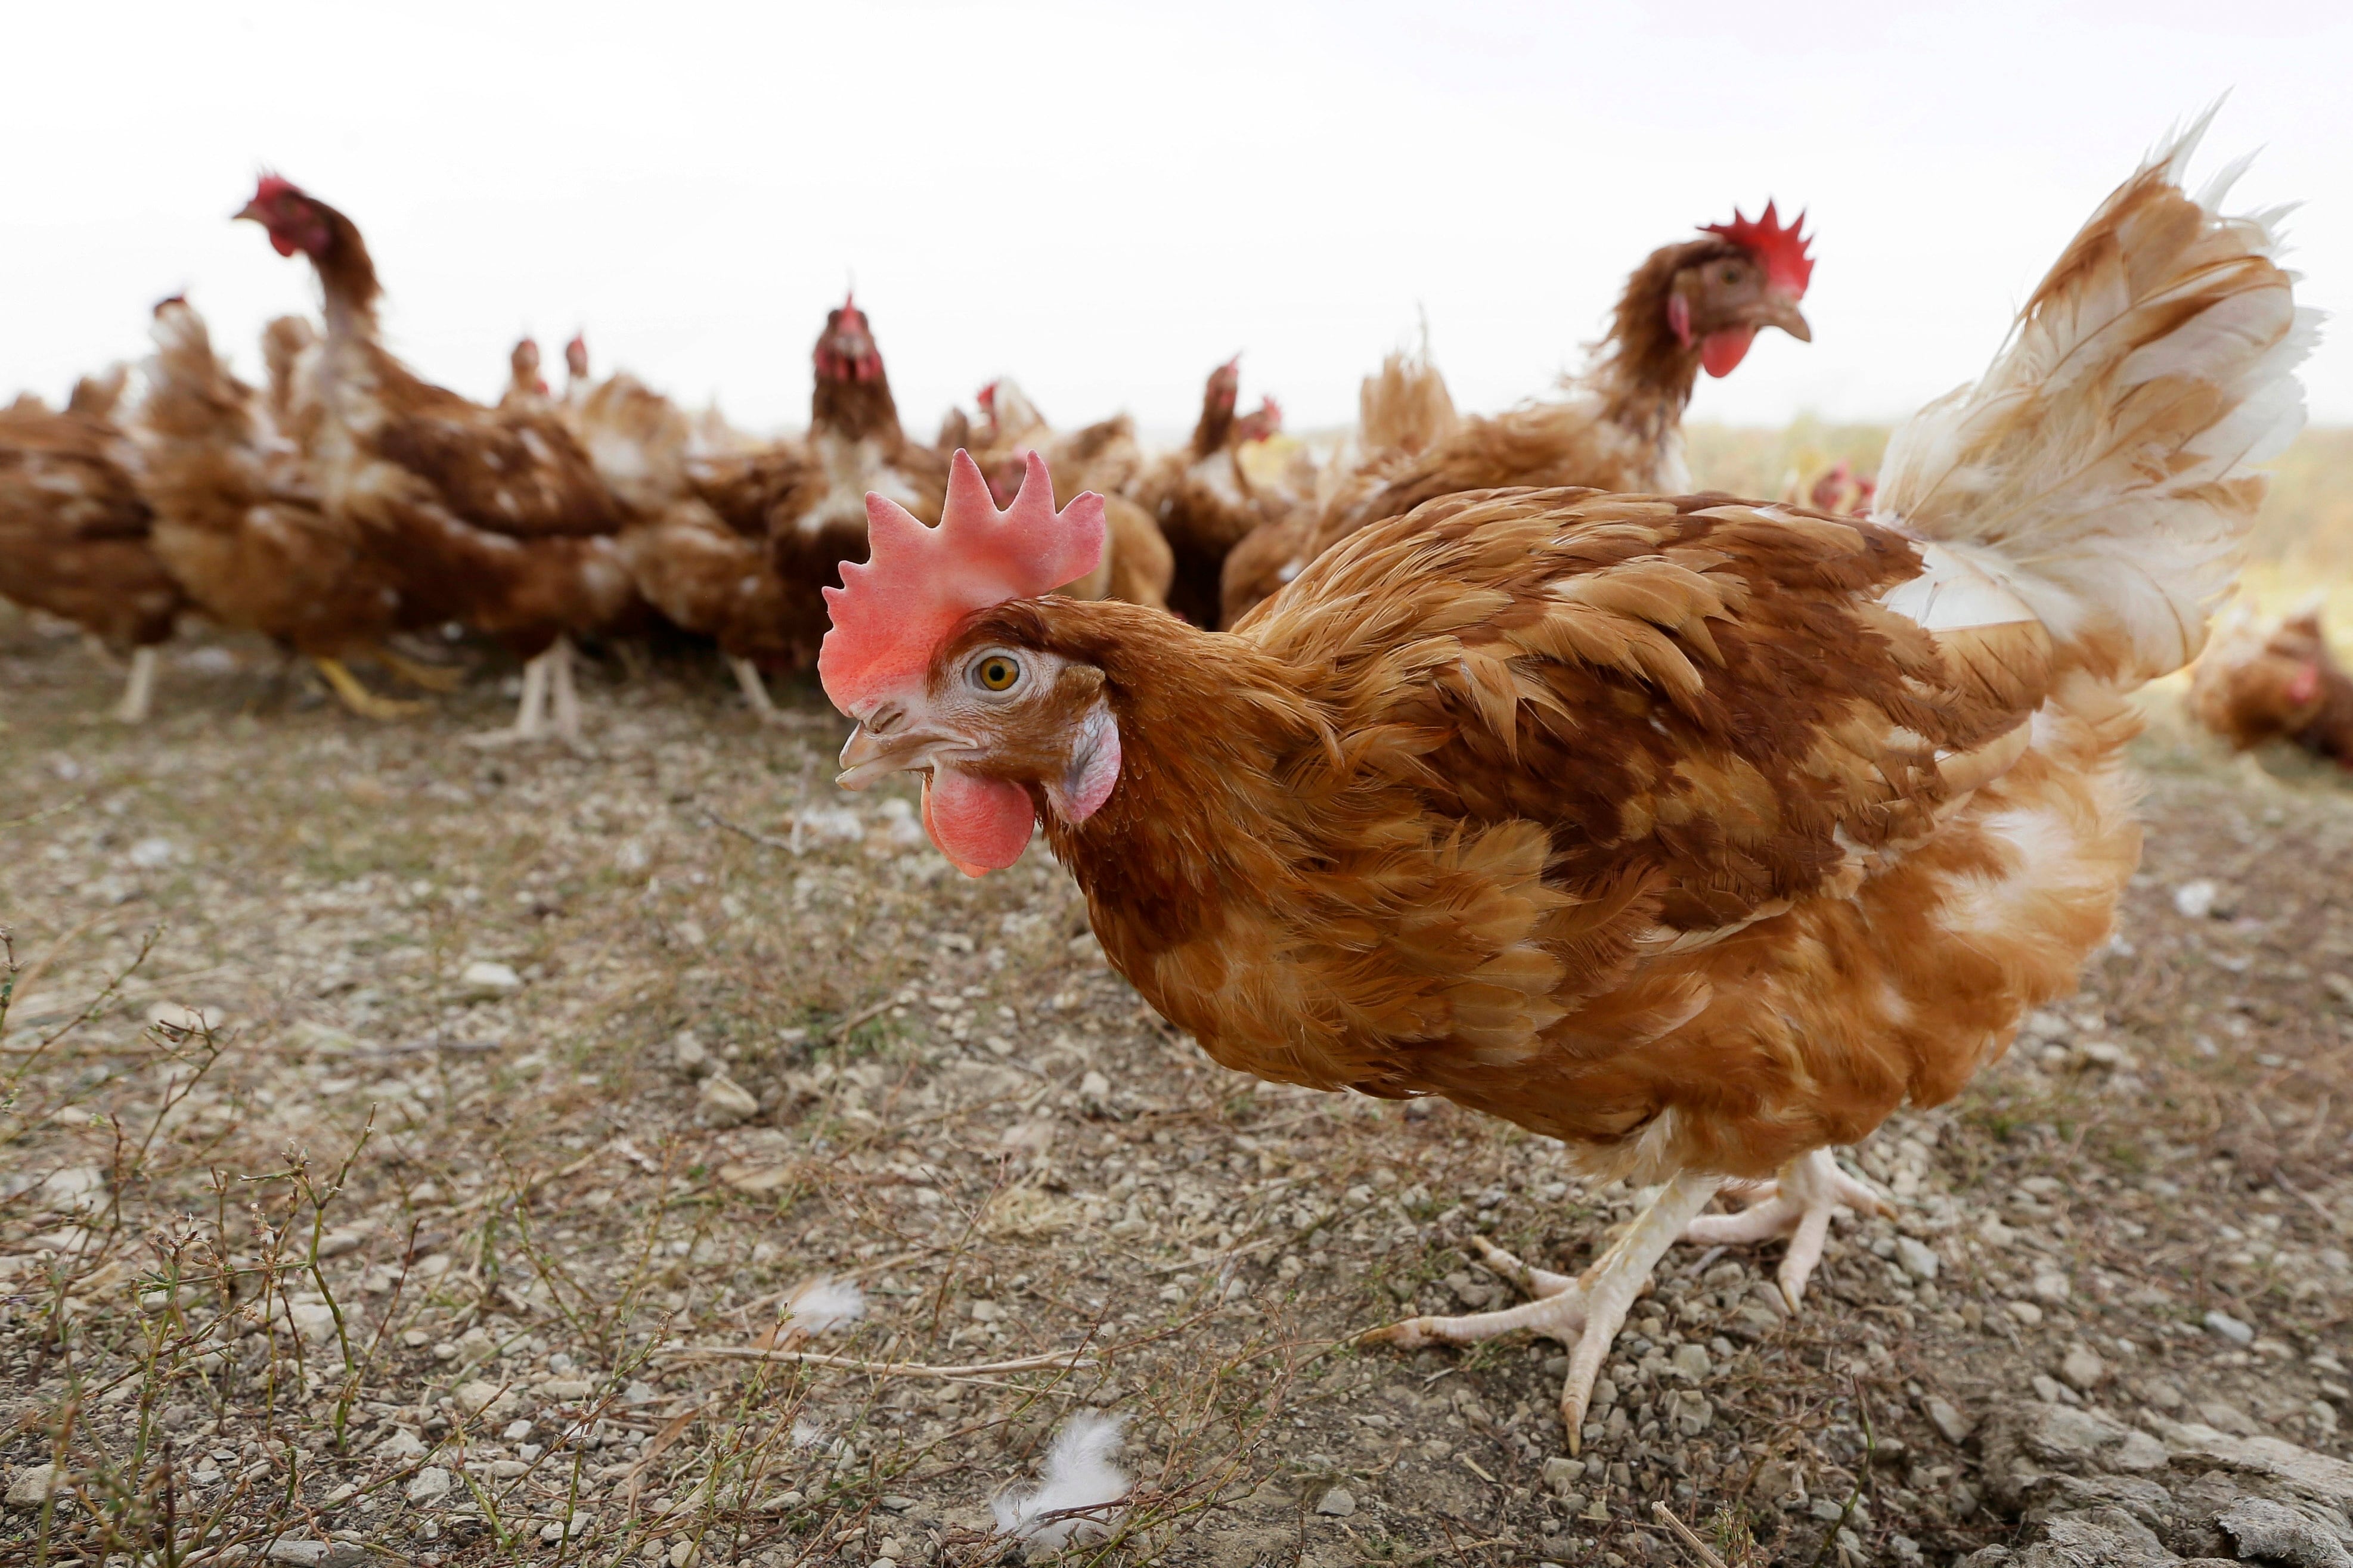  Una epidemia de gripe aviar azota el mundo desde 2020 